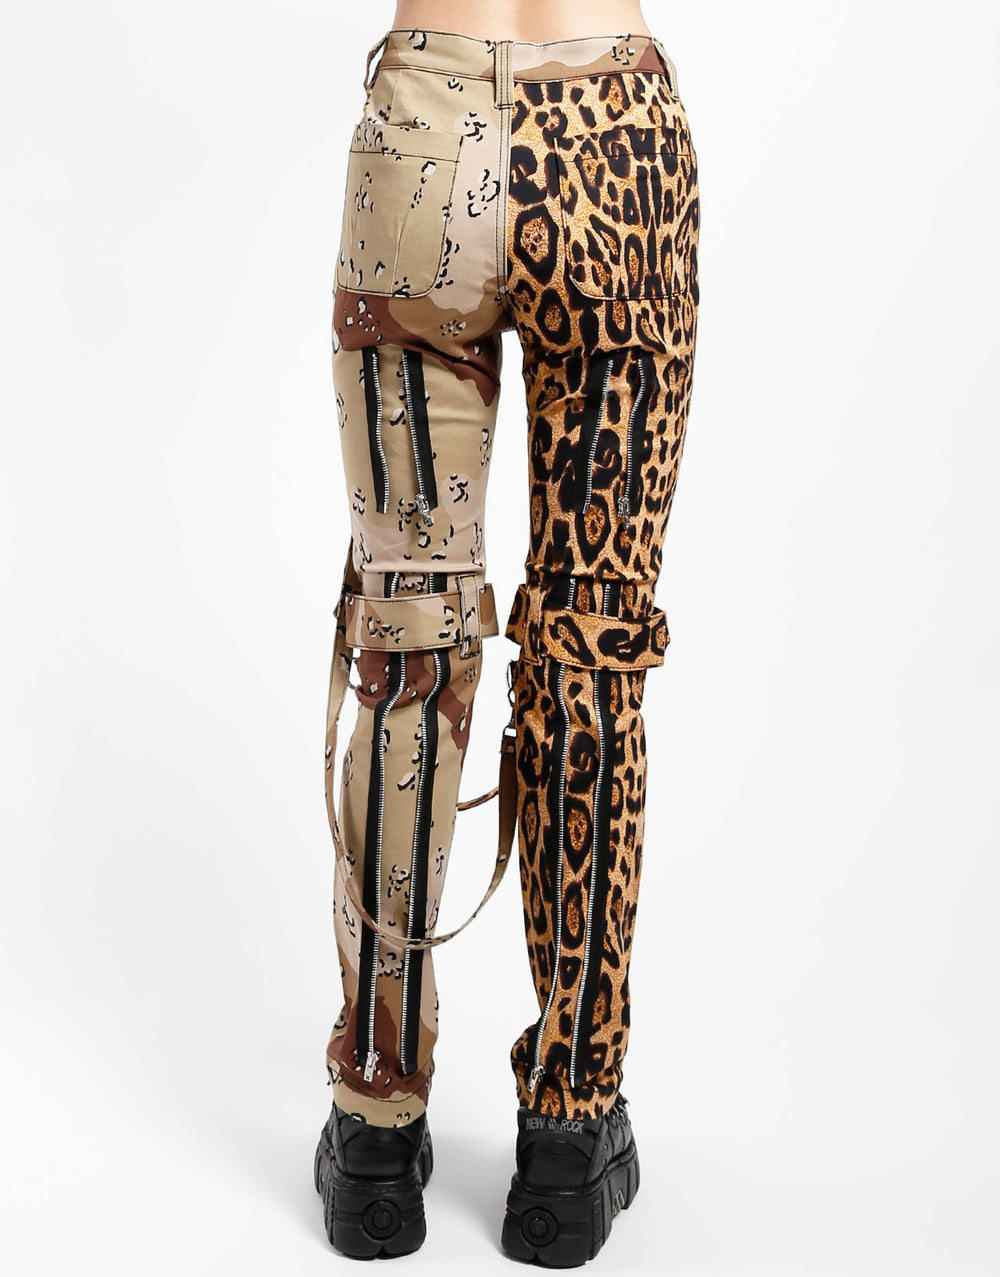 Second Life Marketplace - trinixxx Denim/Leather/PVC Pants Leopard